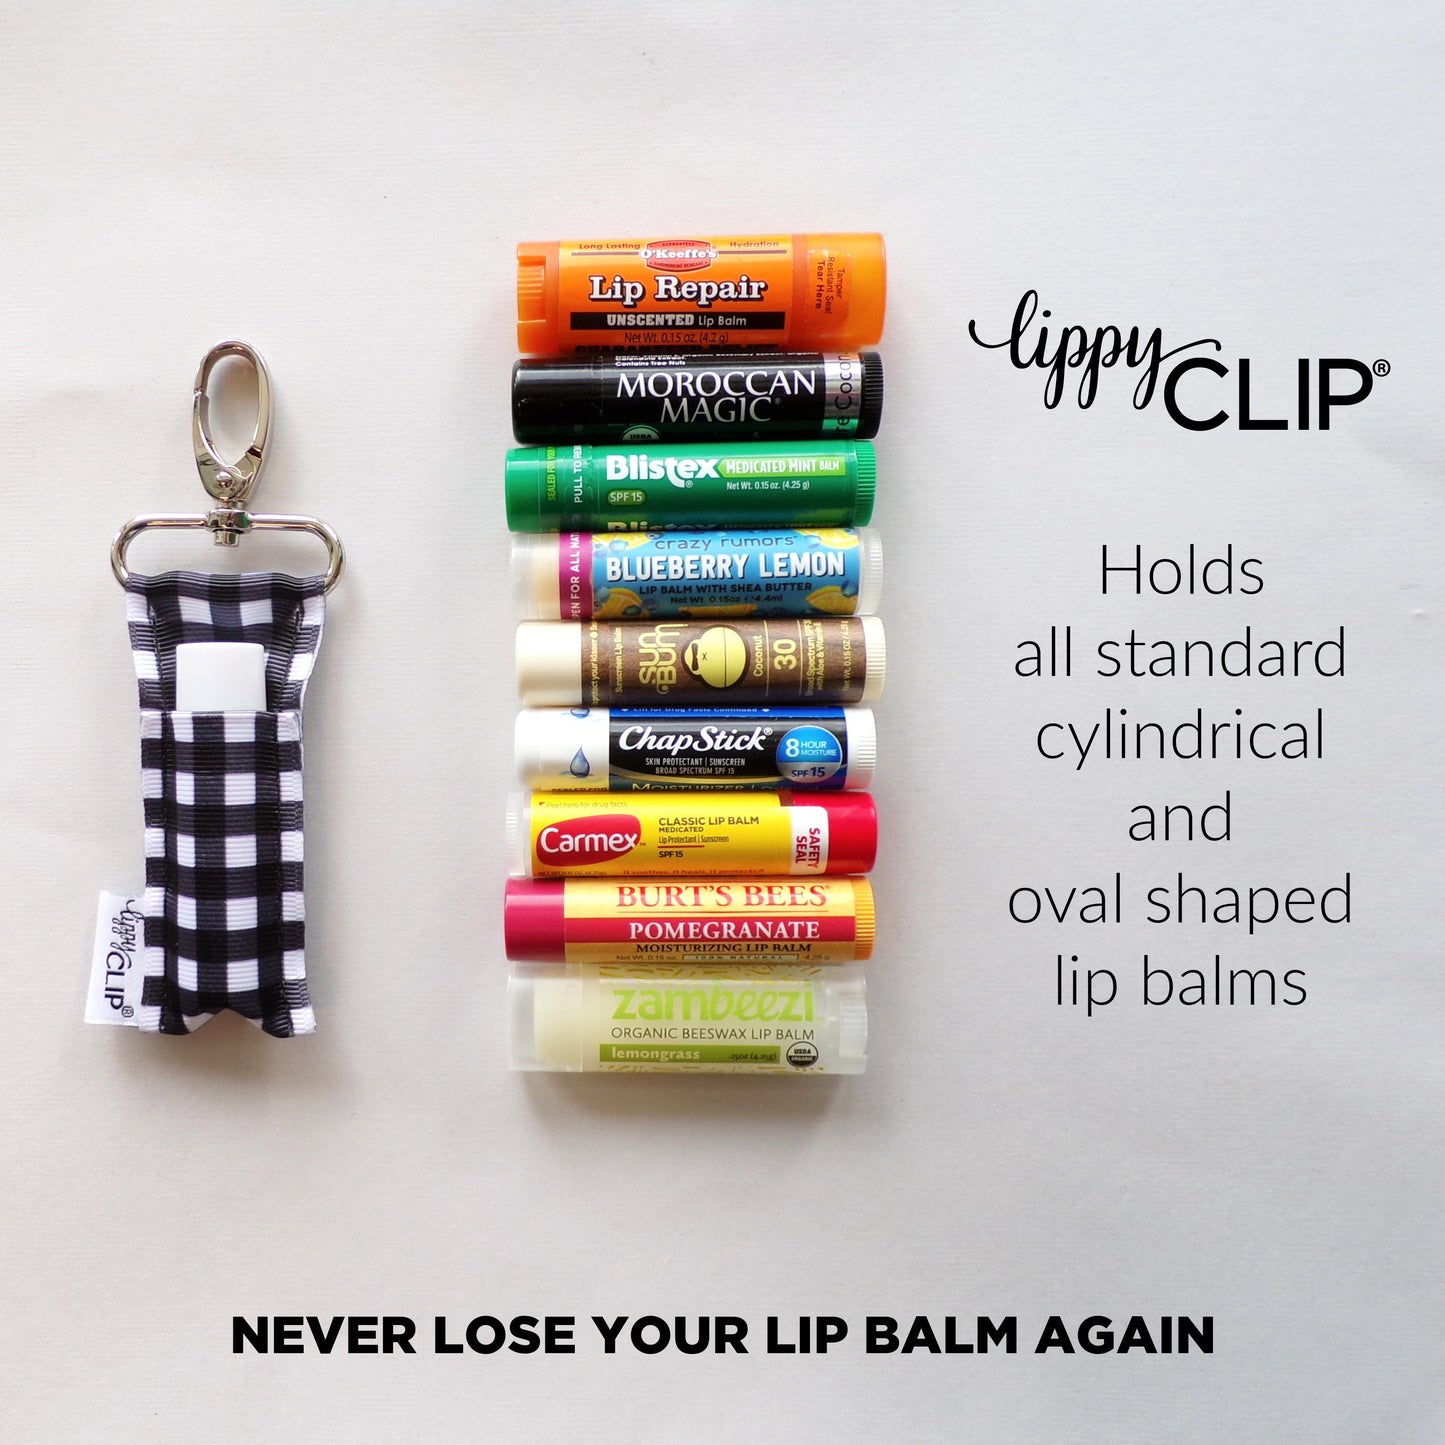 Time for Tea LippyClip® Lip Balm Holder